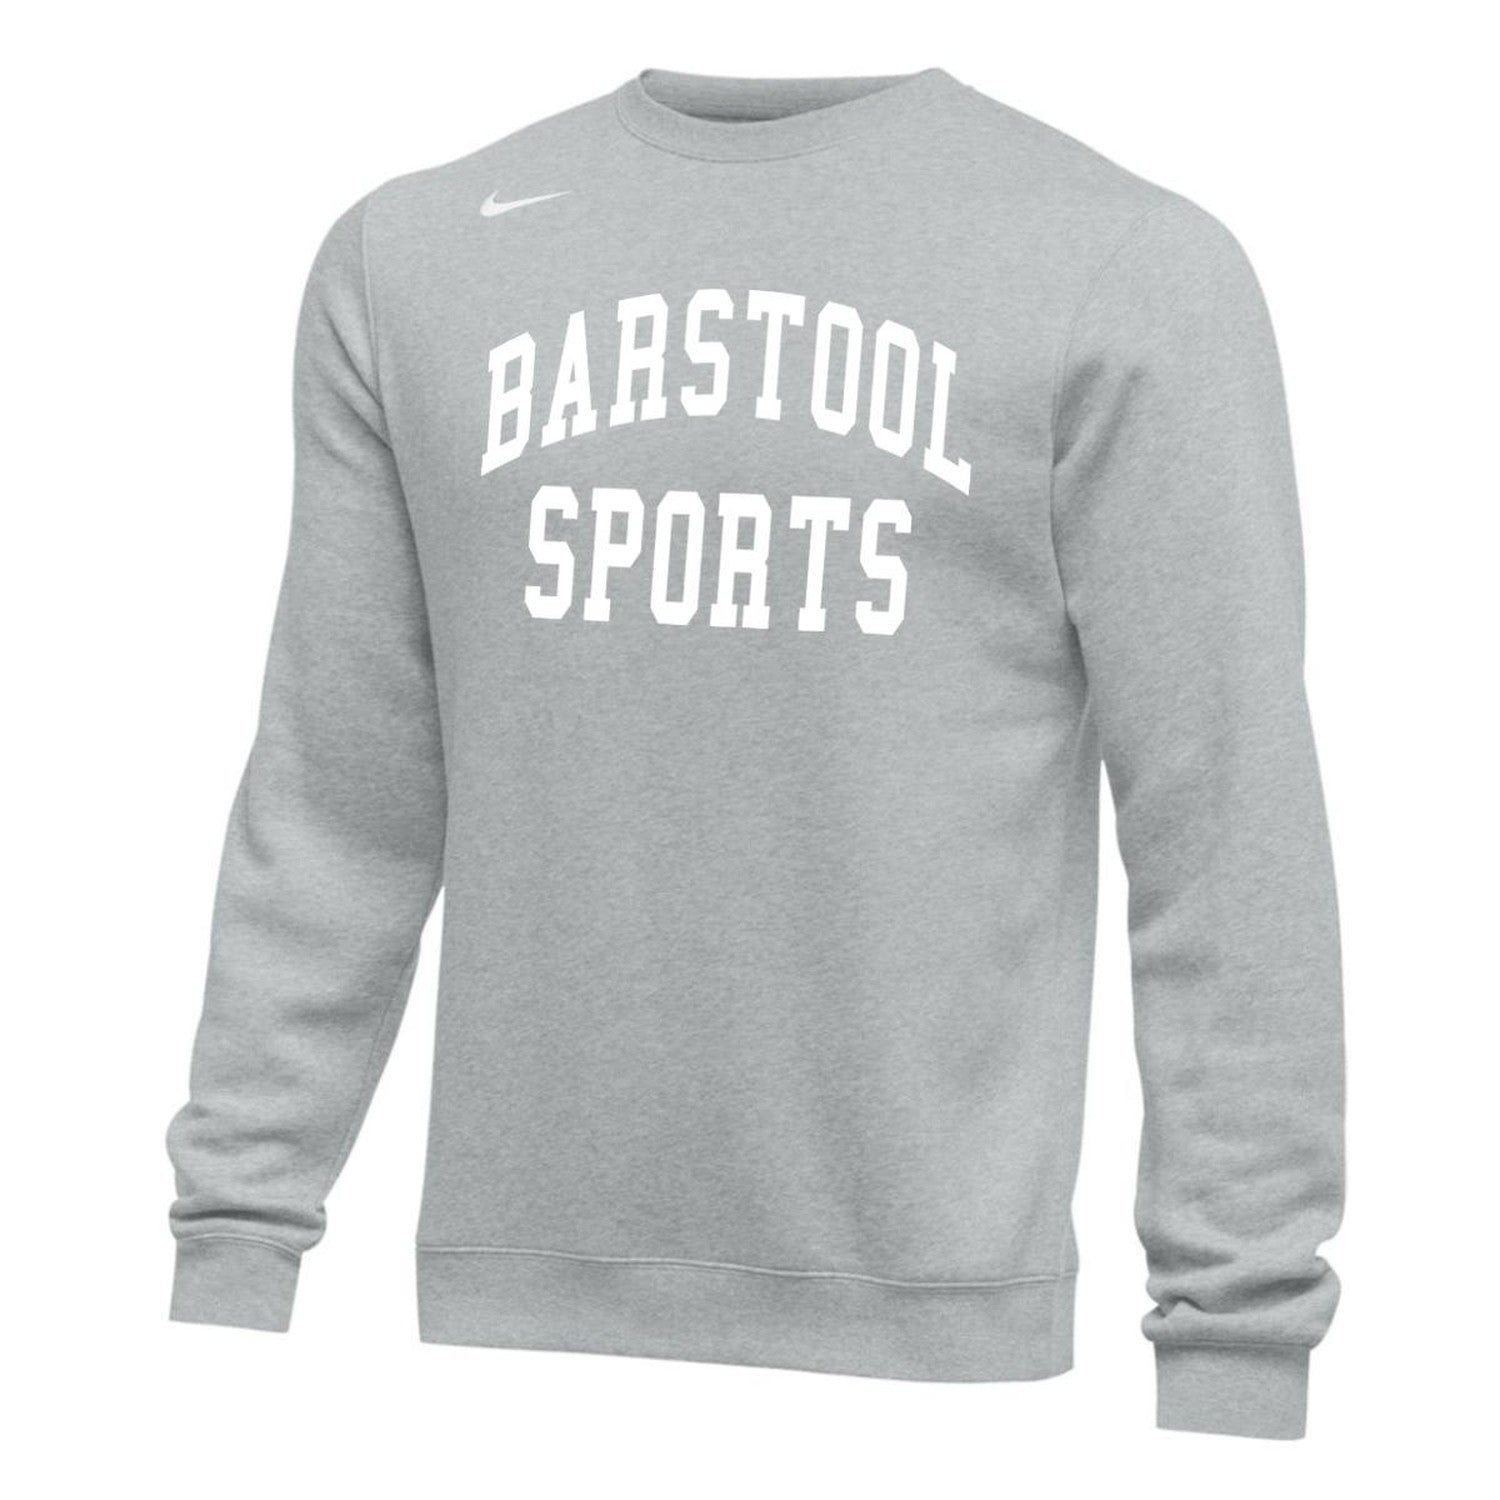 Barstool Sports Nike Crewneck-Crewnecks-Barstool Sports-Grey-S-Barstool Sports